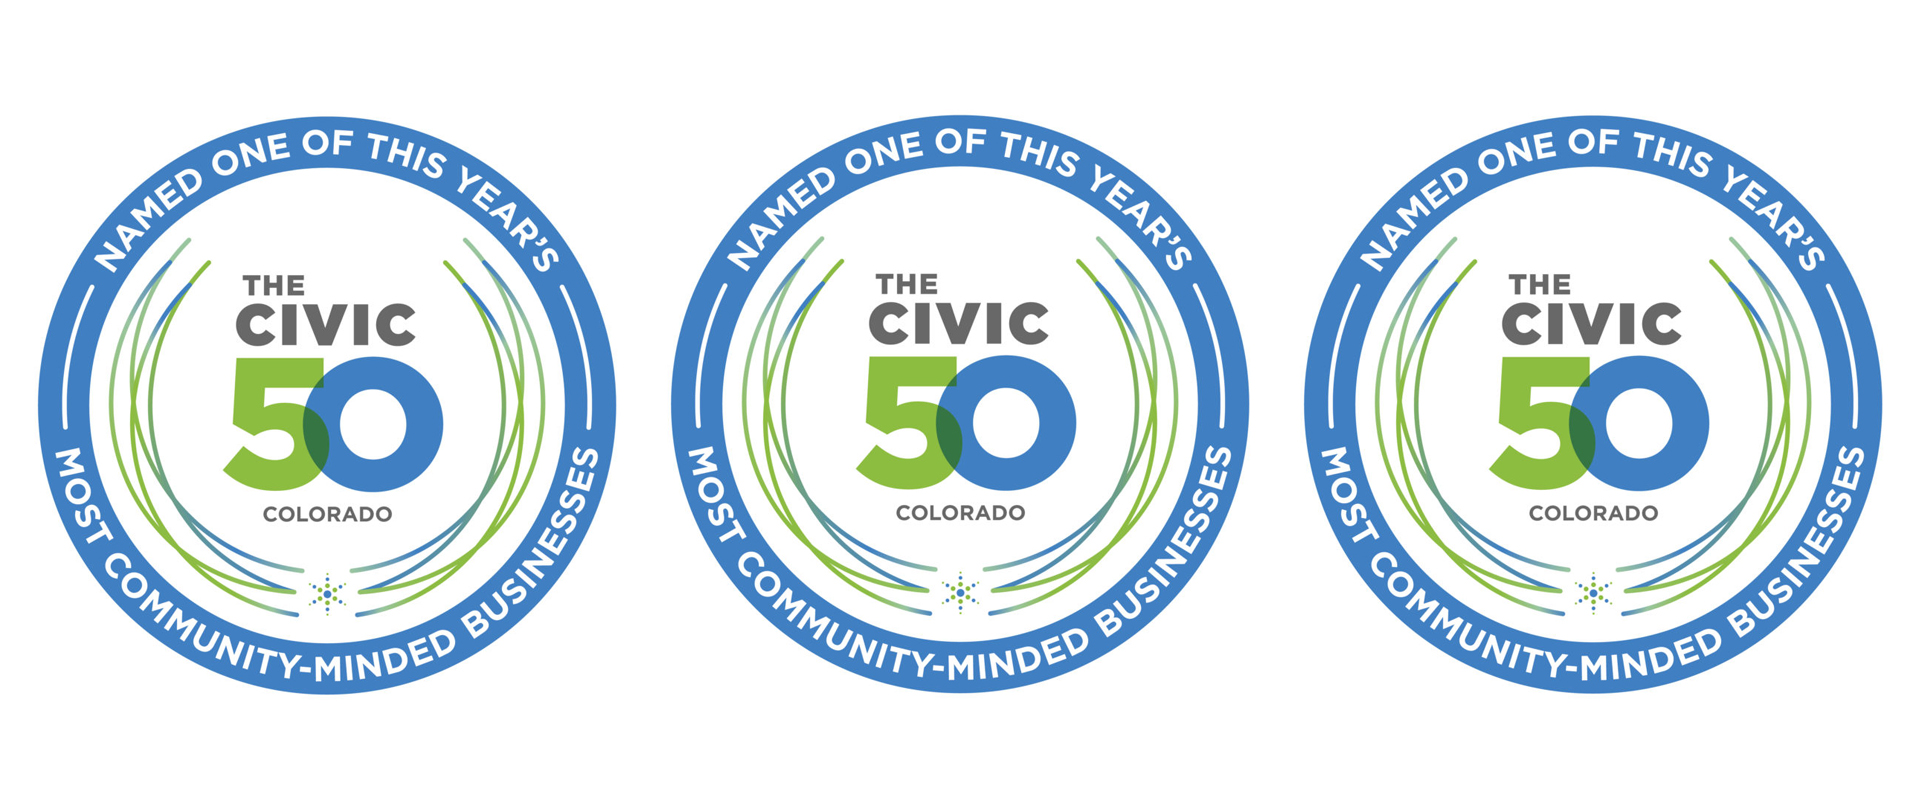 Header Image showing the Civic 50 Colorado logo